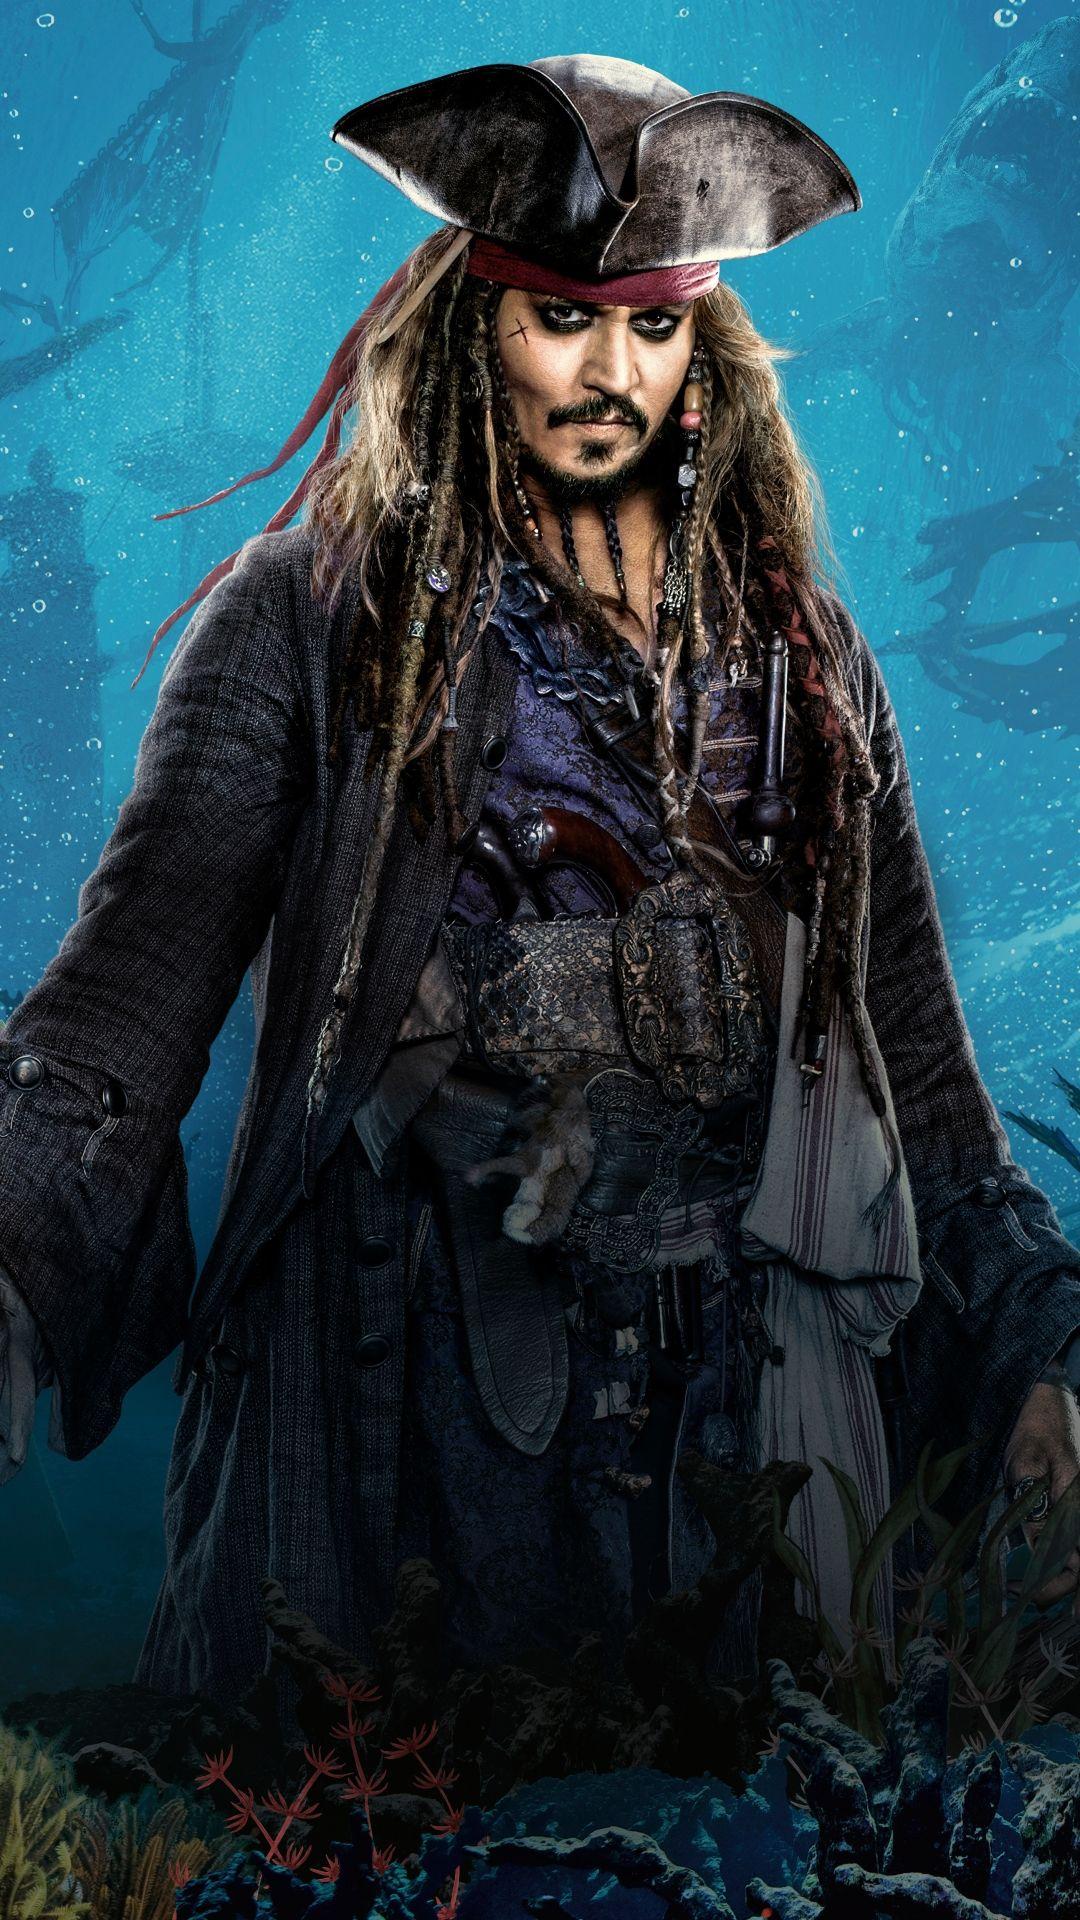 Captain Jack Sparrow Iphone Wallpapers Top Free Captain Jack Sparrow Iphone Backgrounds Wallpaperaccess